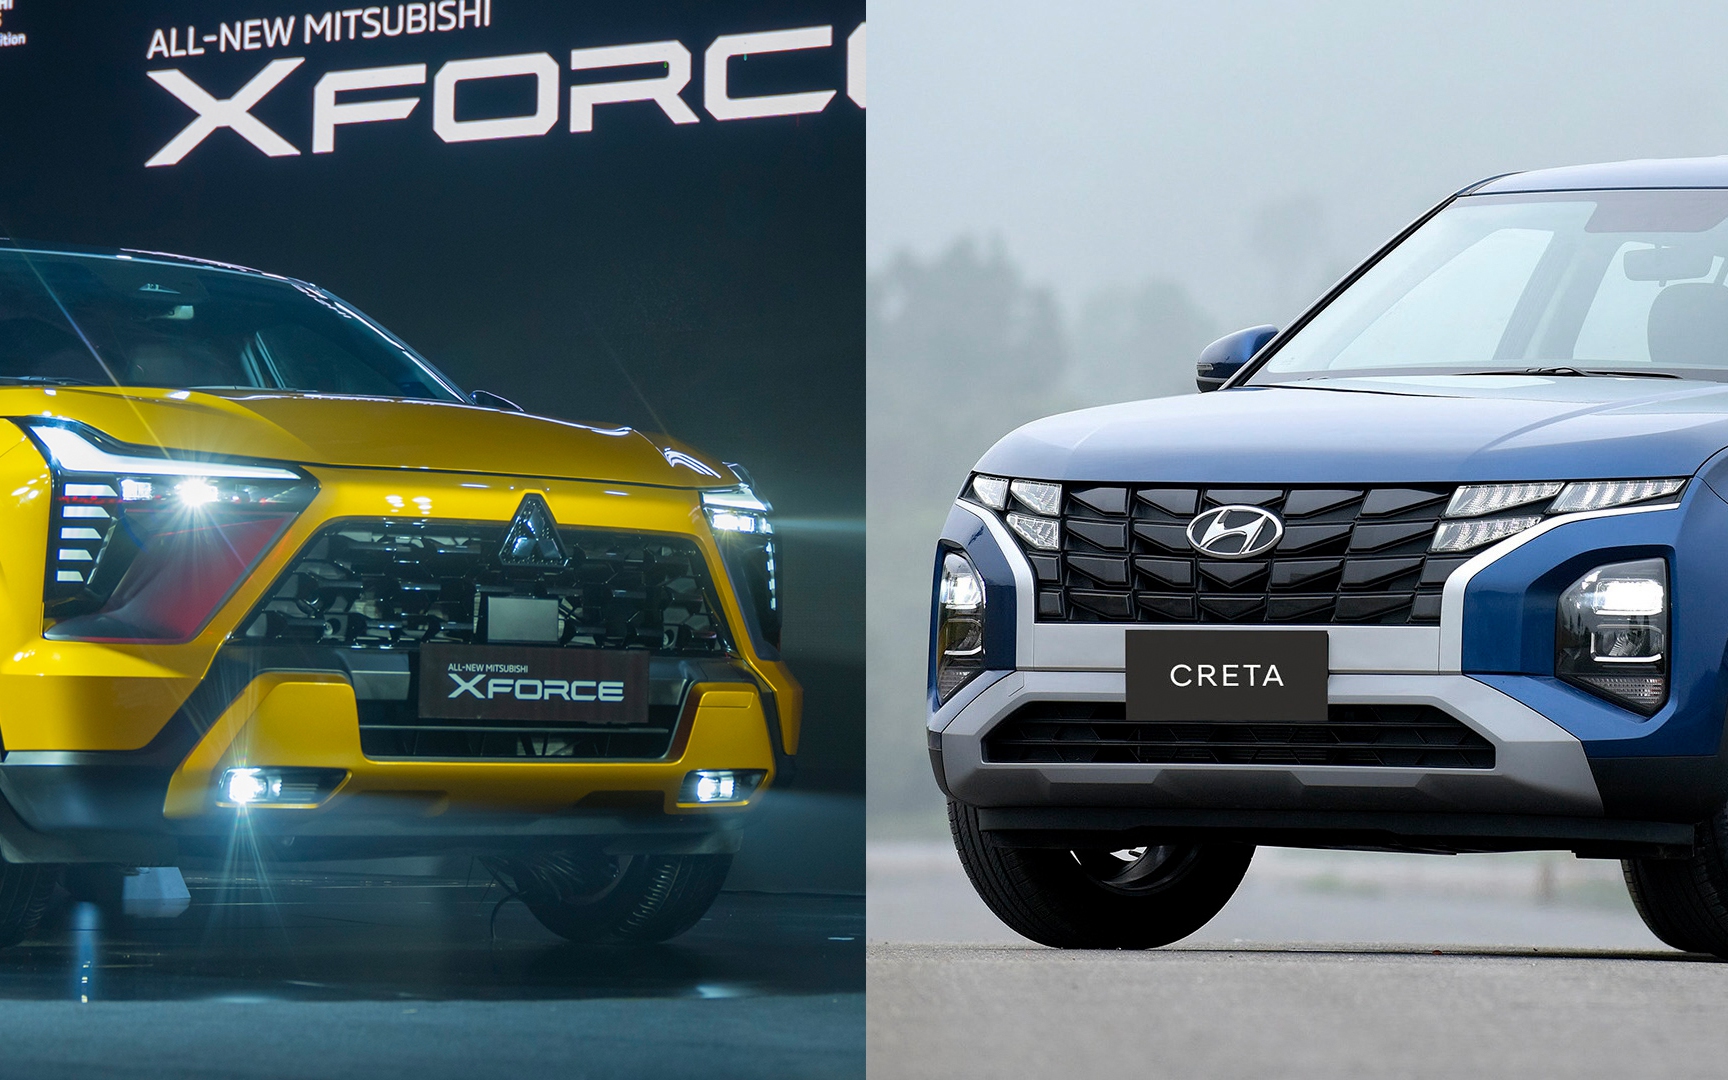 Xe gầm cao tầm giá 700 triệu: Chọn Mitsubishi Xforce hay Hyundai Creta?